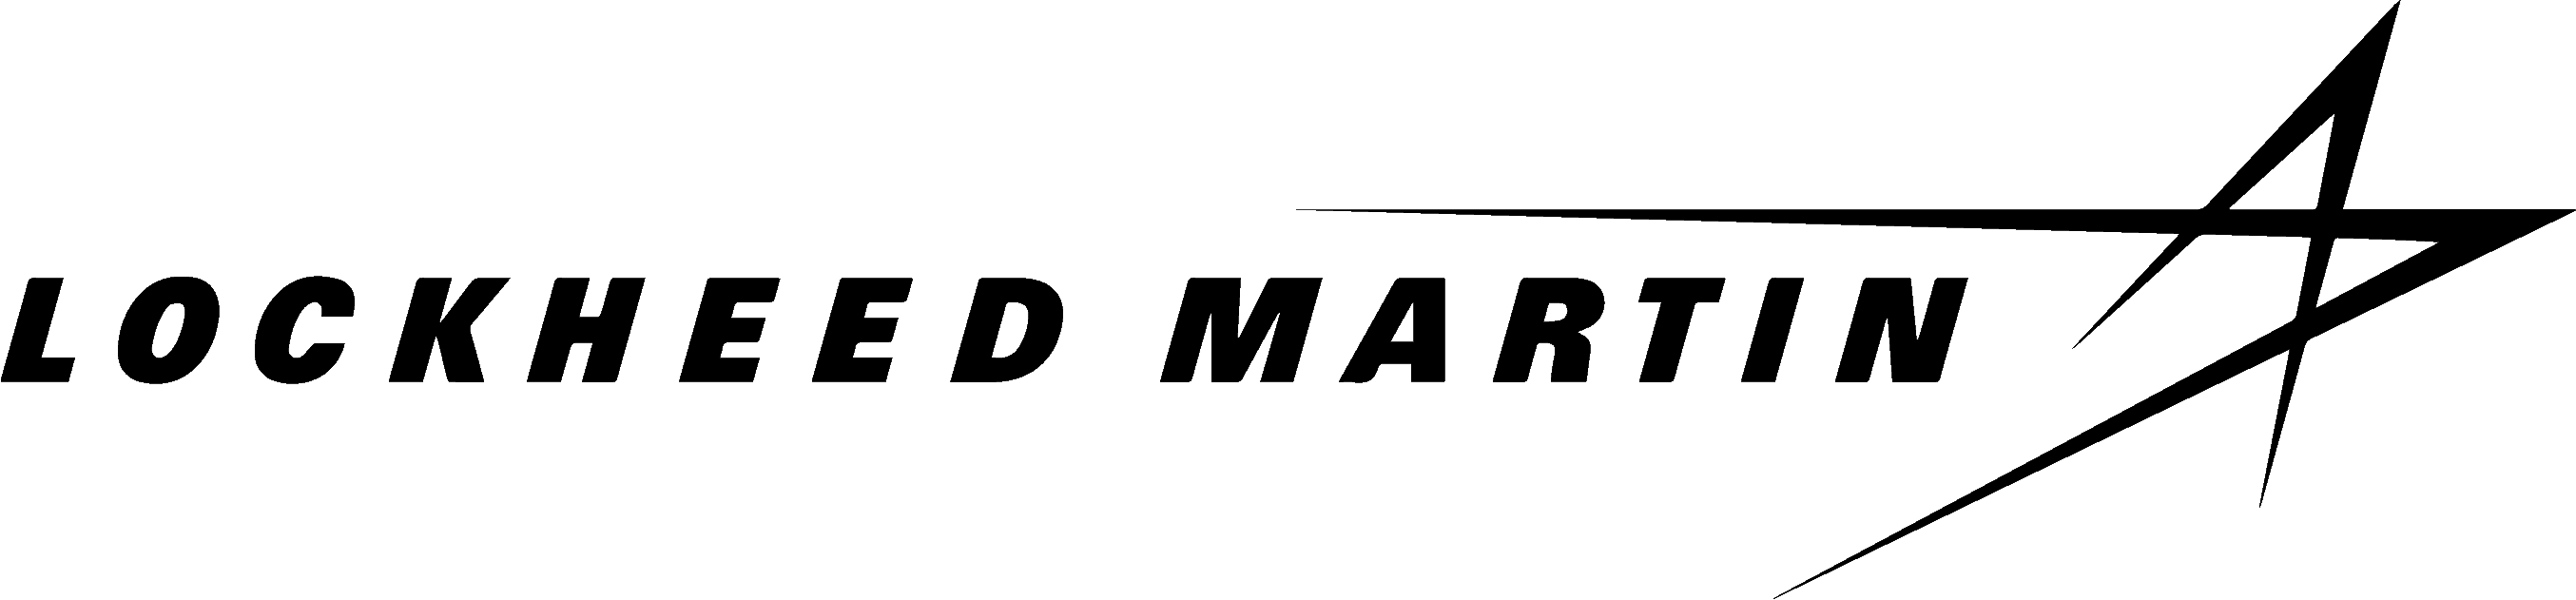 Lockheed Martin logo in black